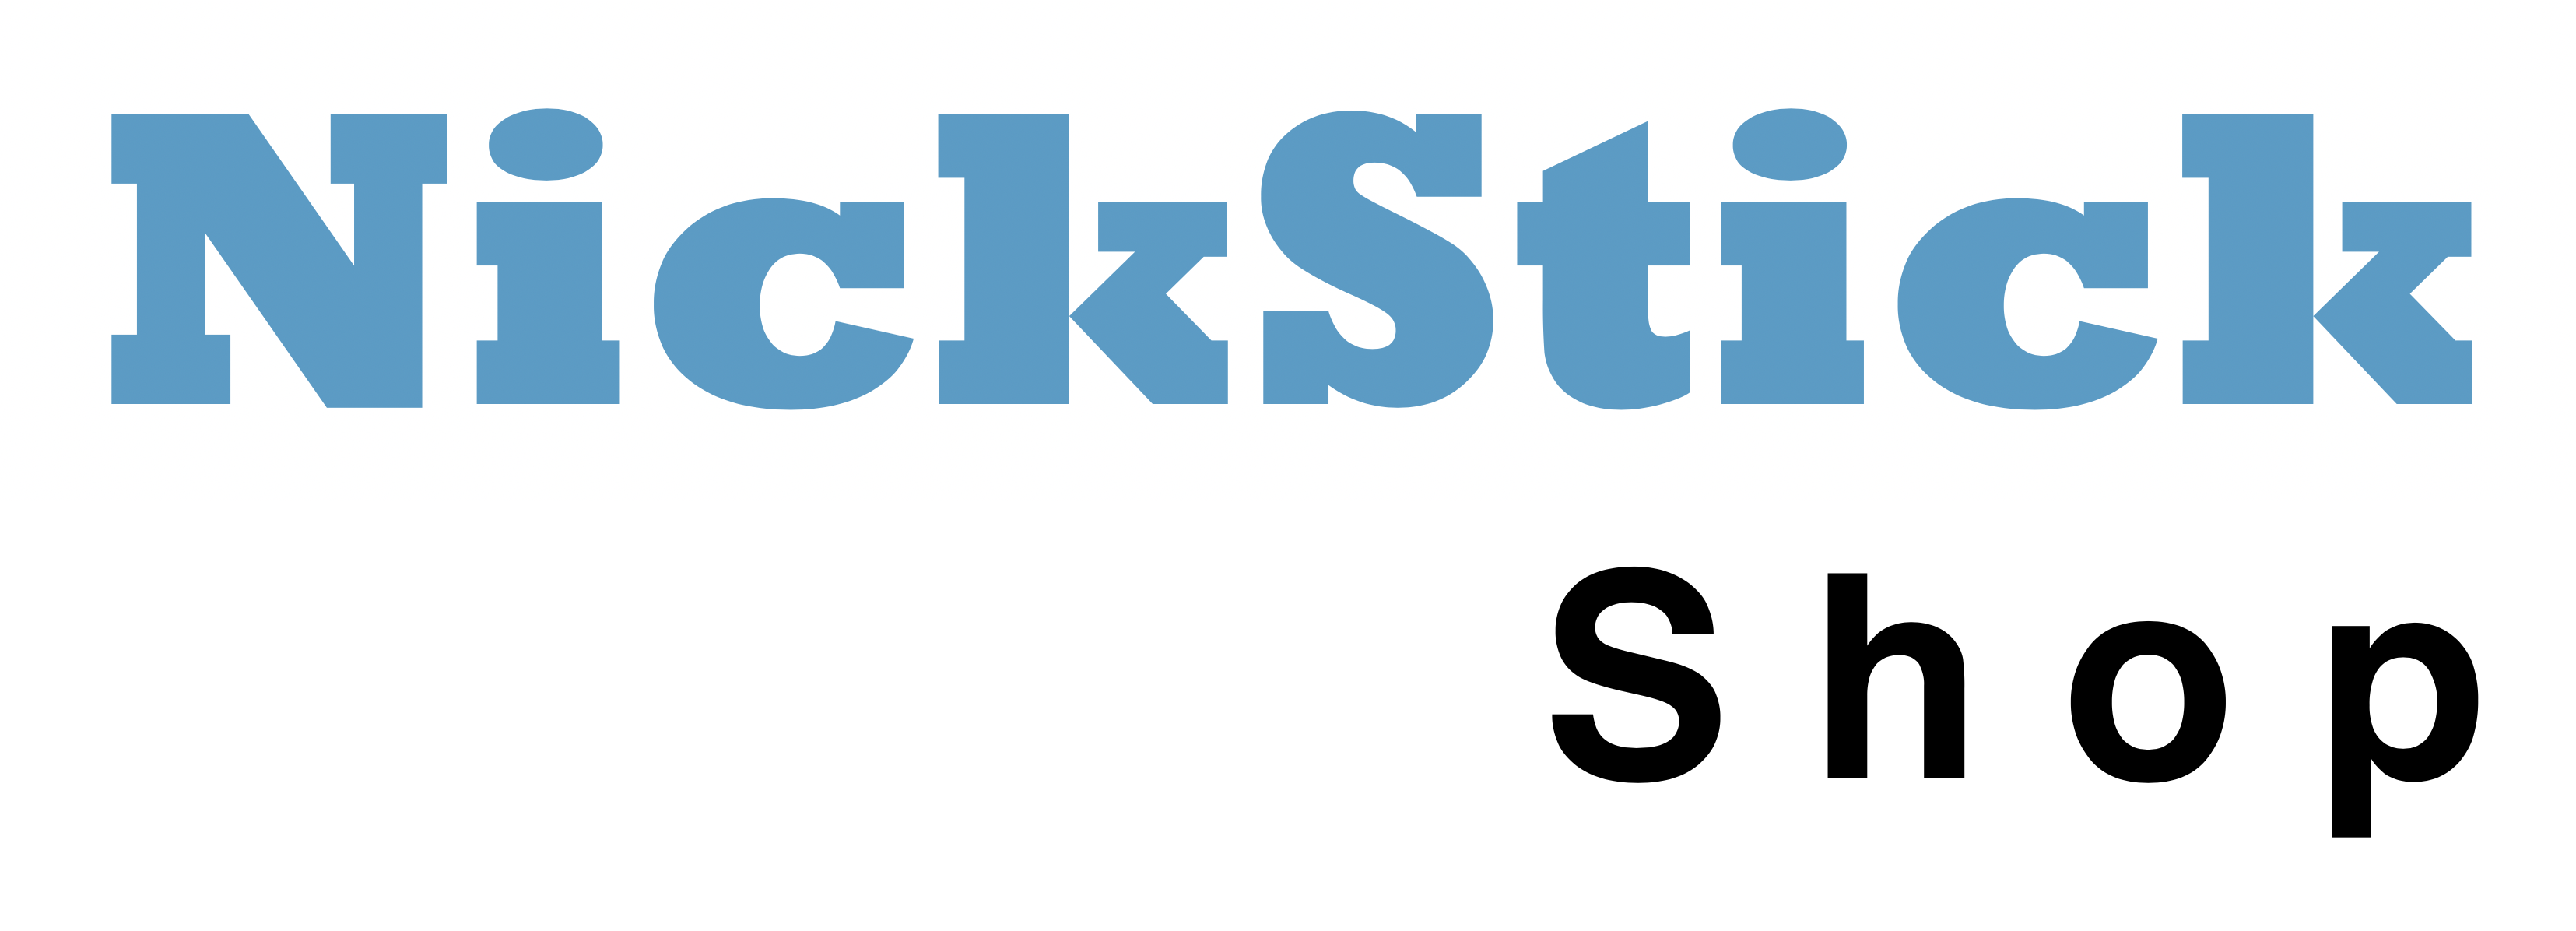 nickstick shop logo